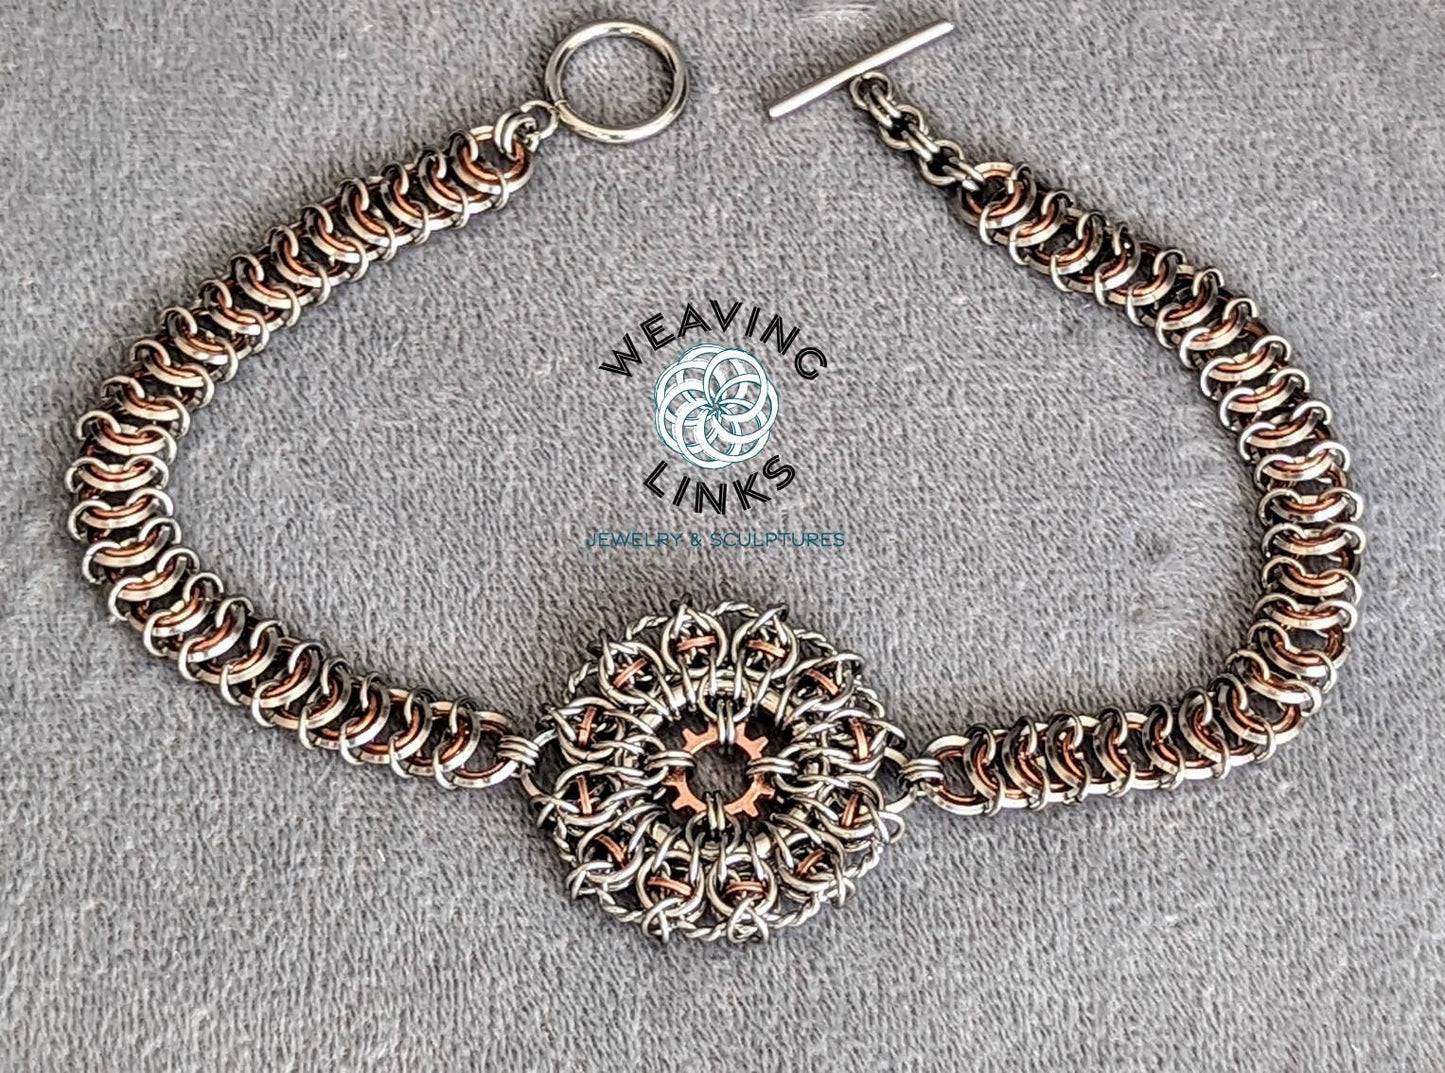 Intricate Steampunk Choker Necklace